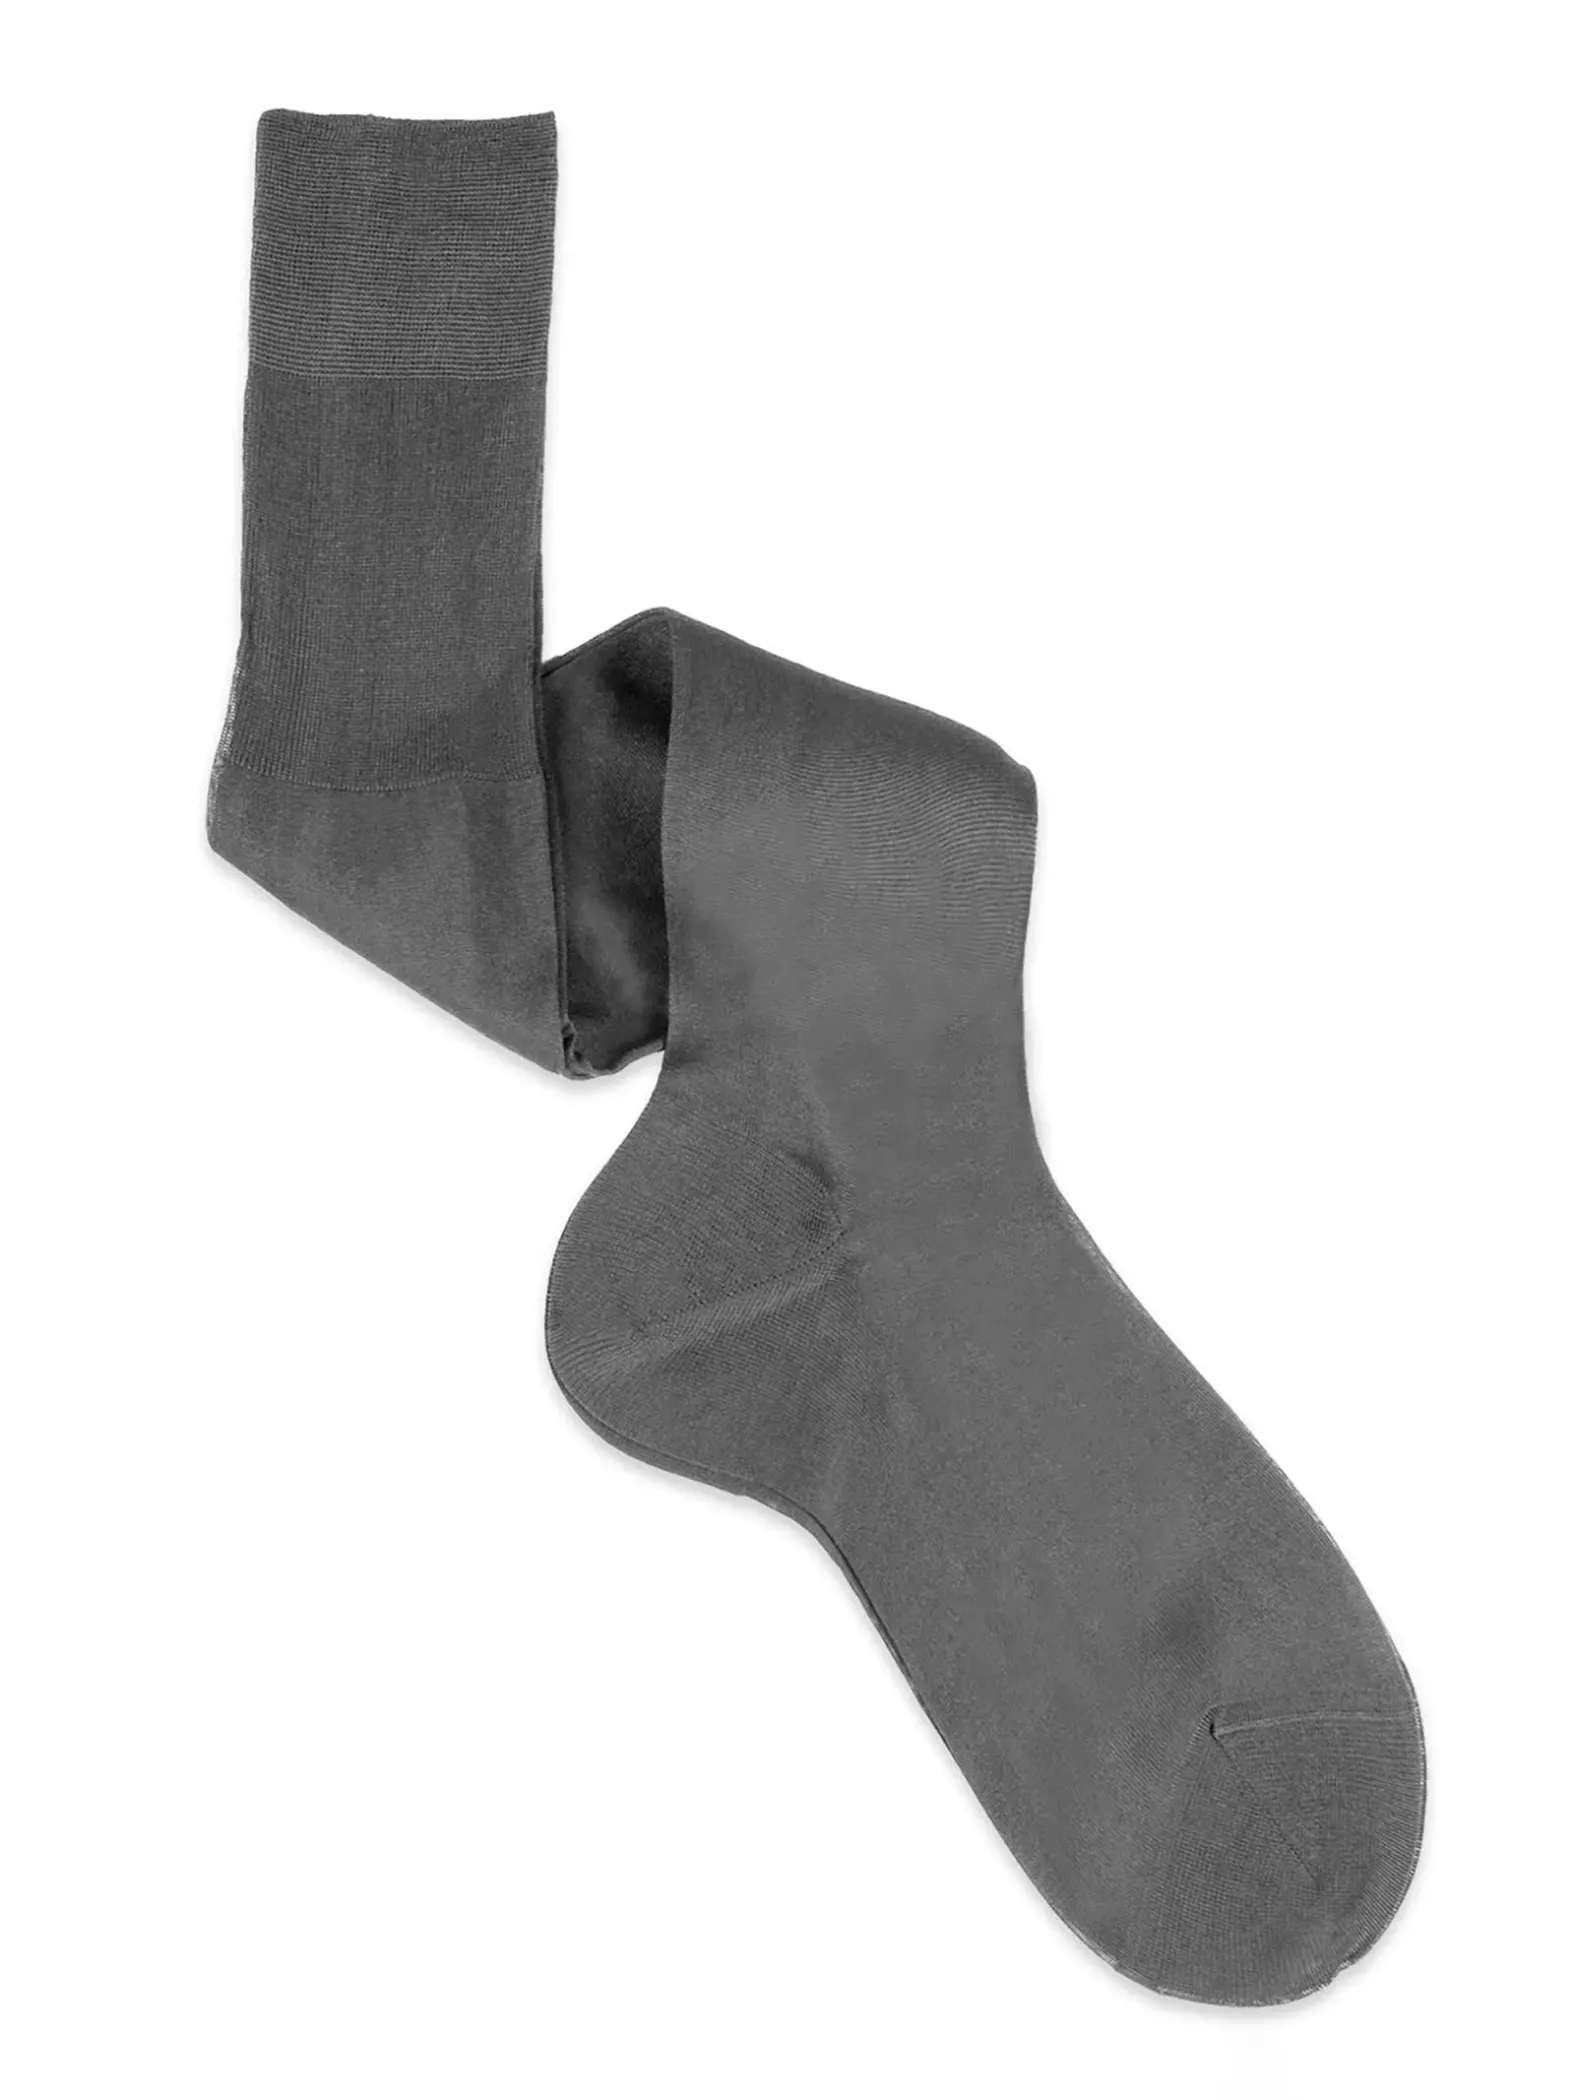 Plain knee high chiffon socks - 100% Filo scozia cotton